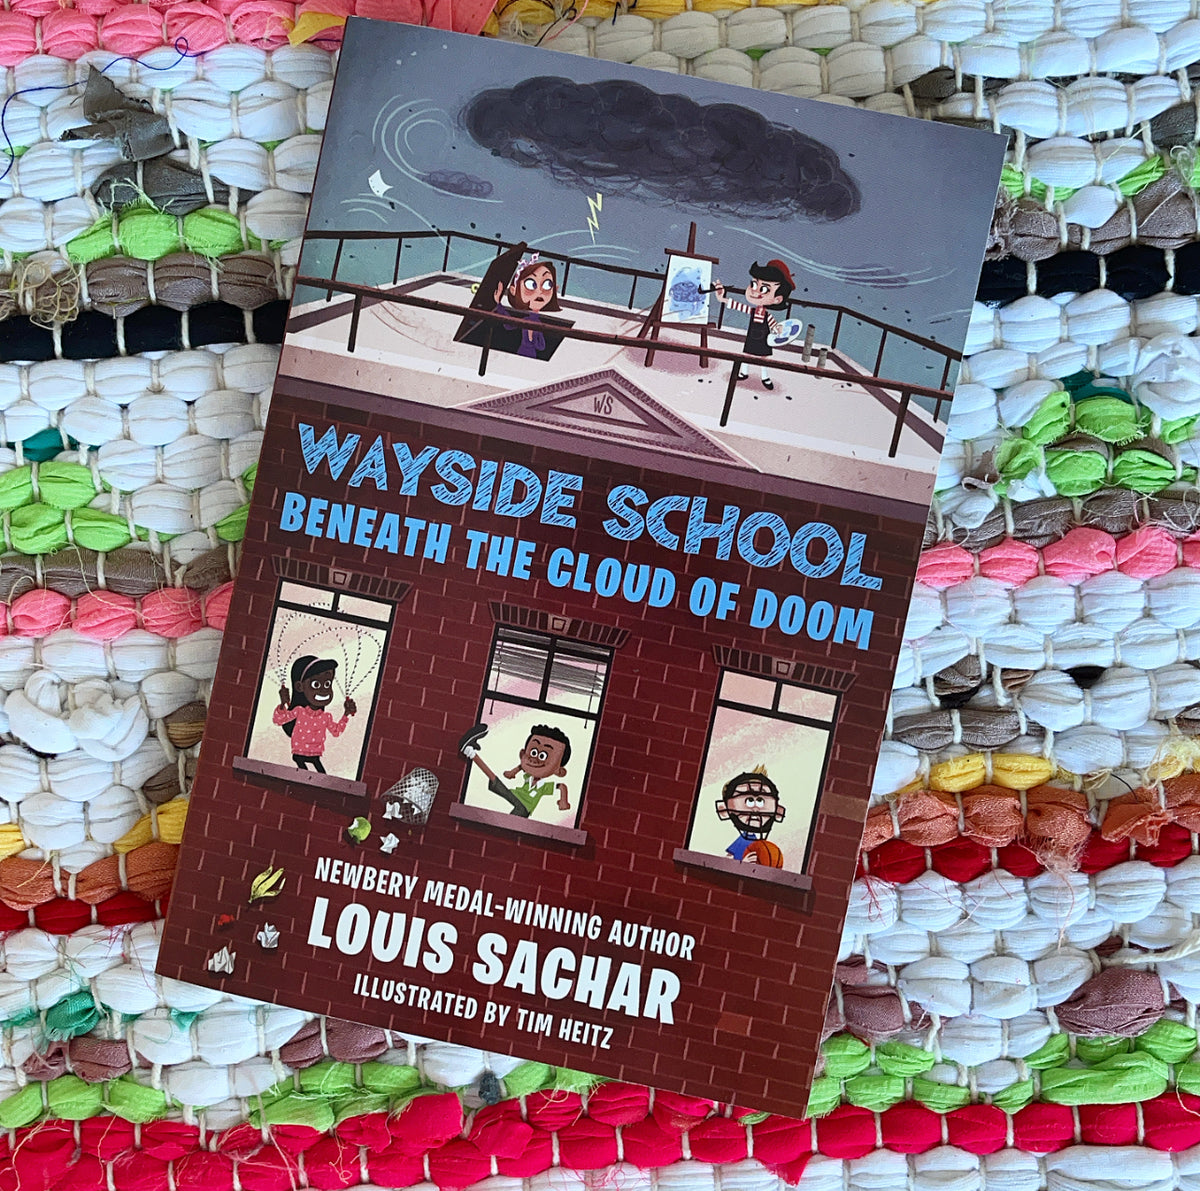 Wayside School Gets a Little Stranger, by Louis Sachar Lit Link/Novel